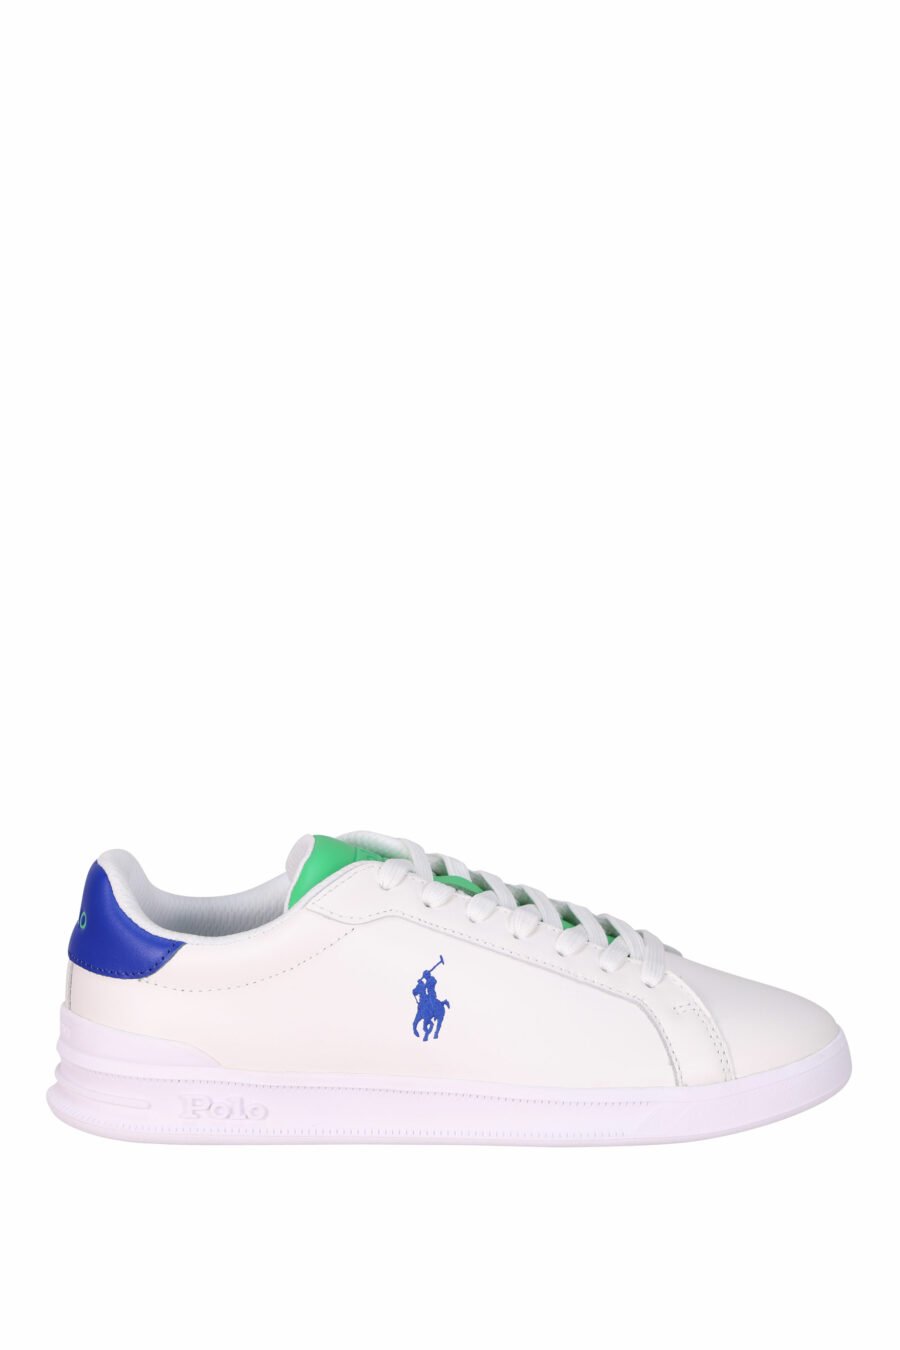 Zapatillas blancas con detalle verde y azul con minilogo "polo" - 3616535905740